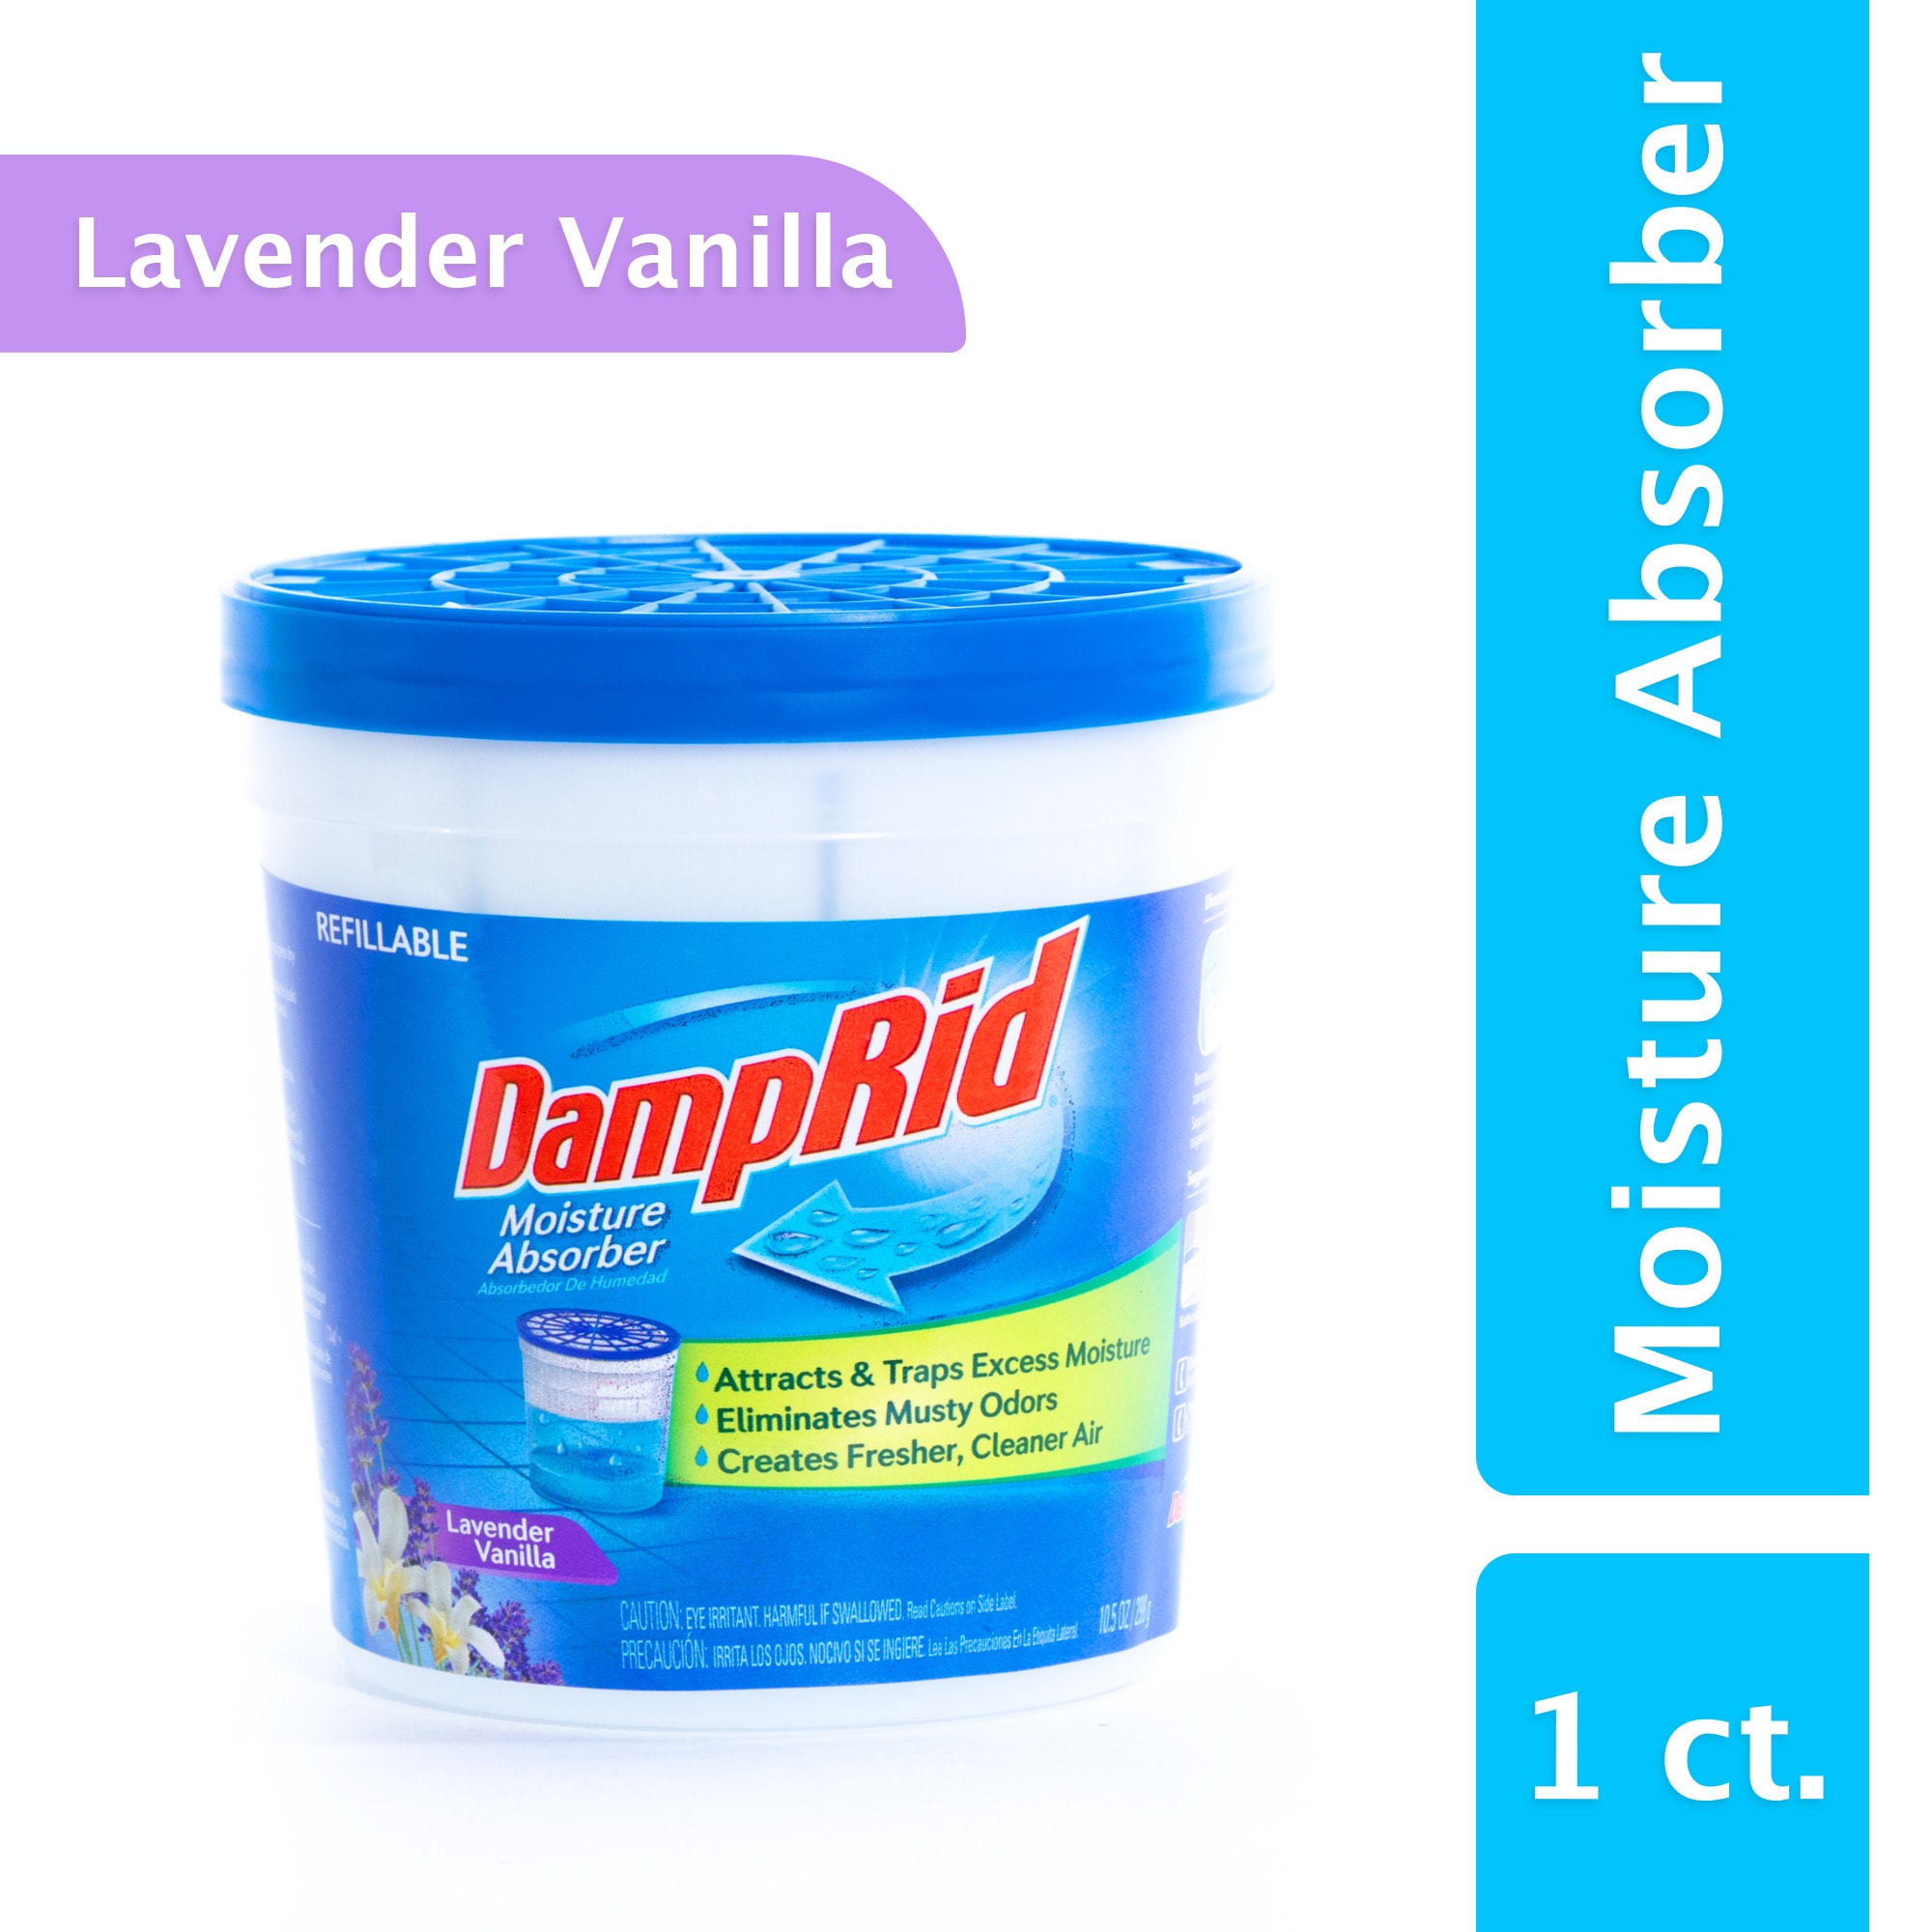 DampRid 0.738-oz Lavender Vanilla Bucket Moisture Absorber in the